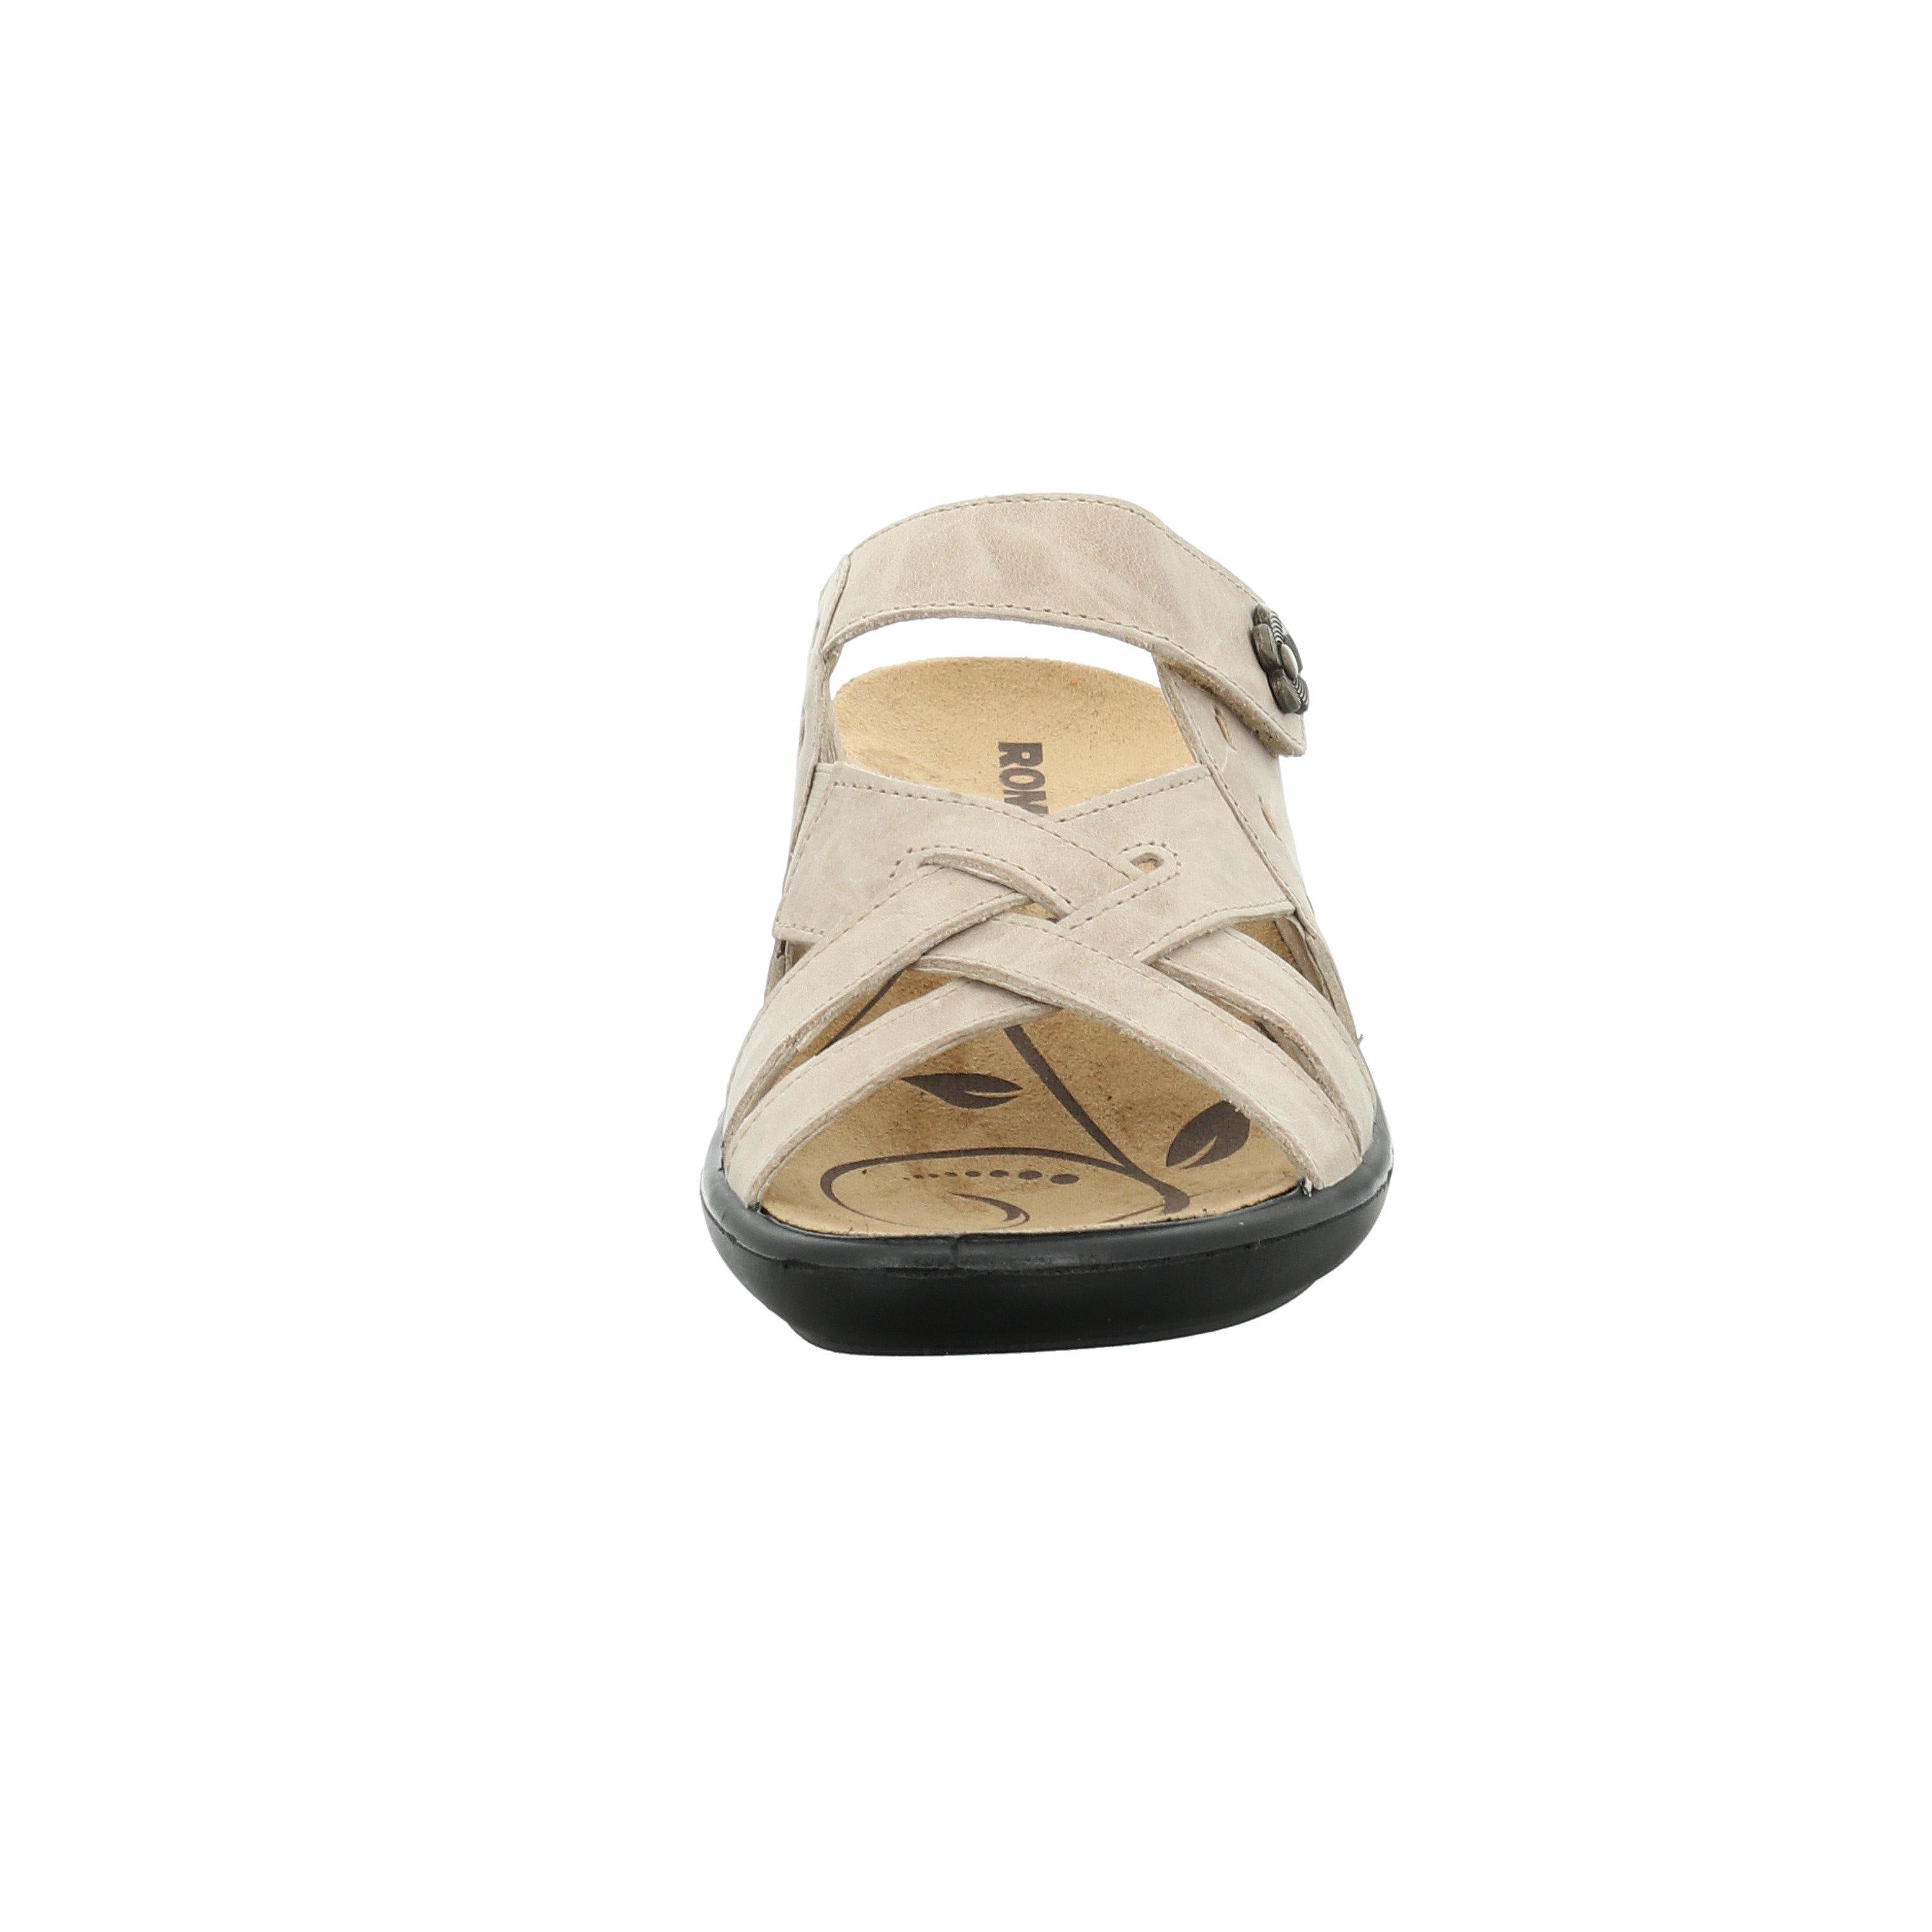 Sandal style IBIZA 99 by Romika USA